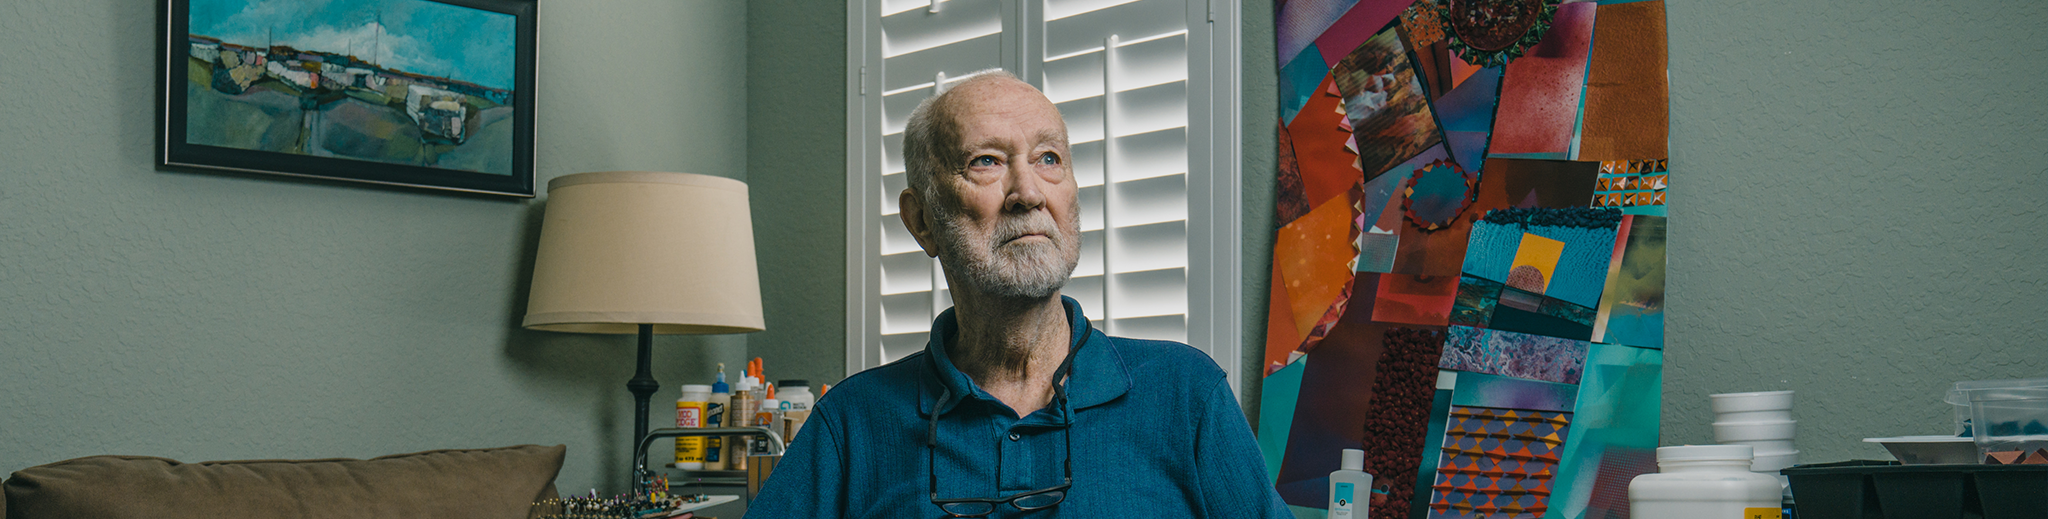 95-year-old Grady Kimsey Still Creates Art Every Day